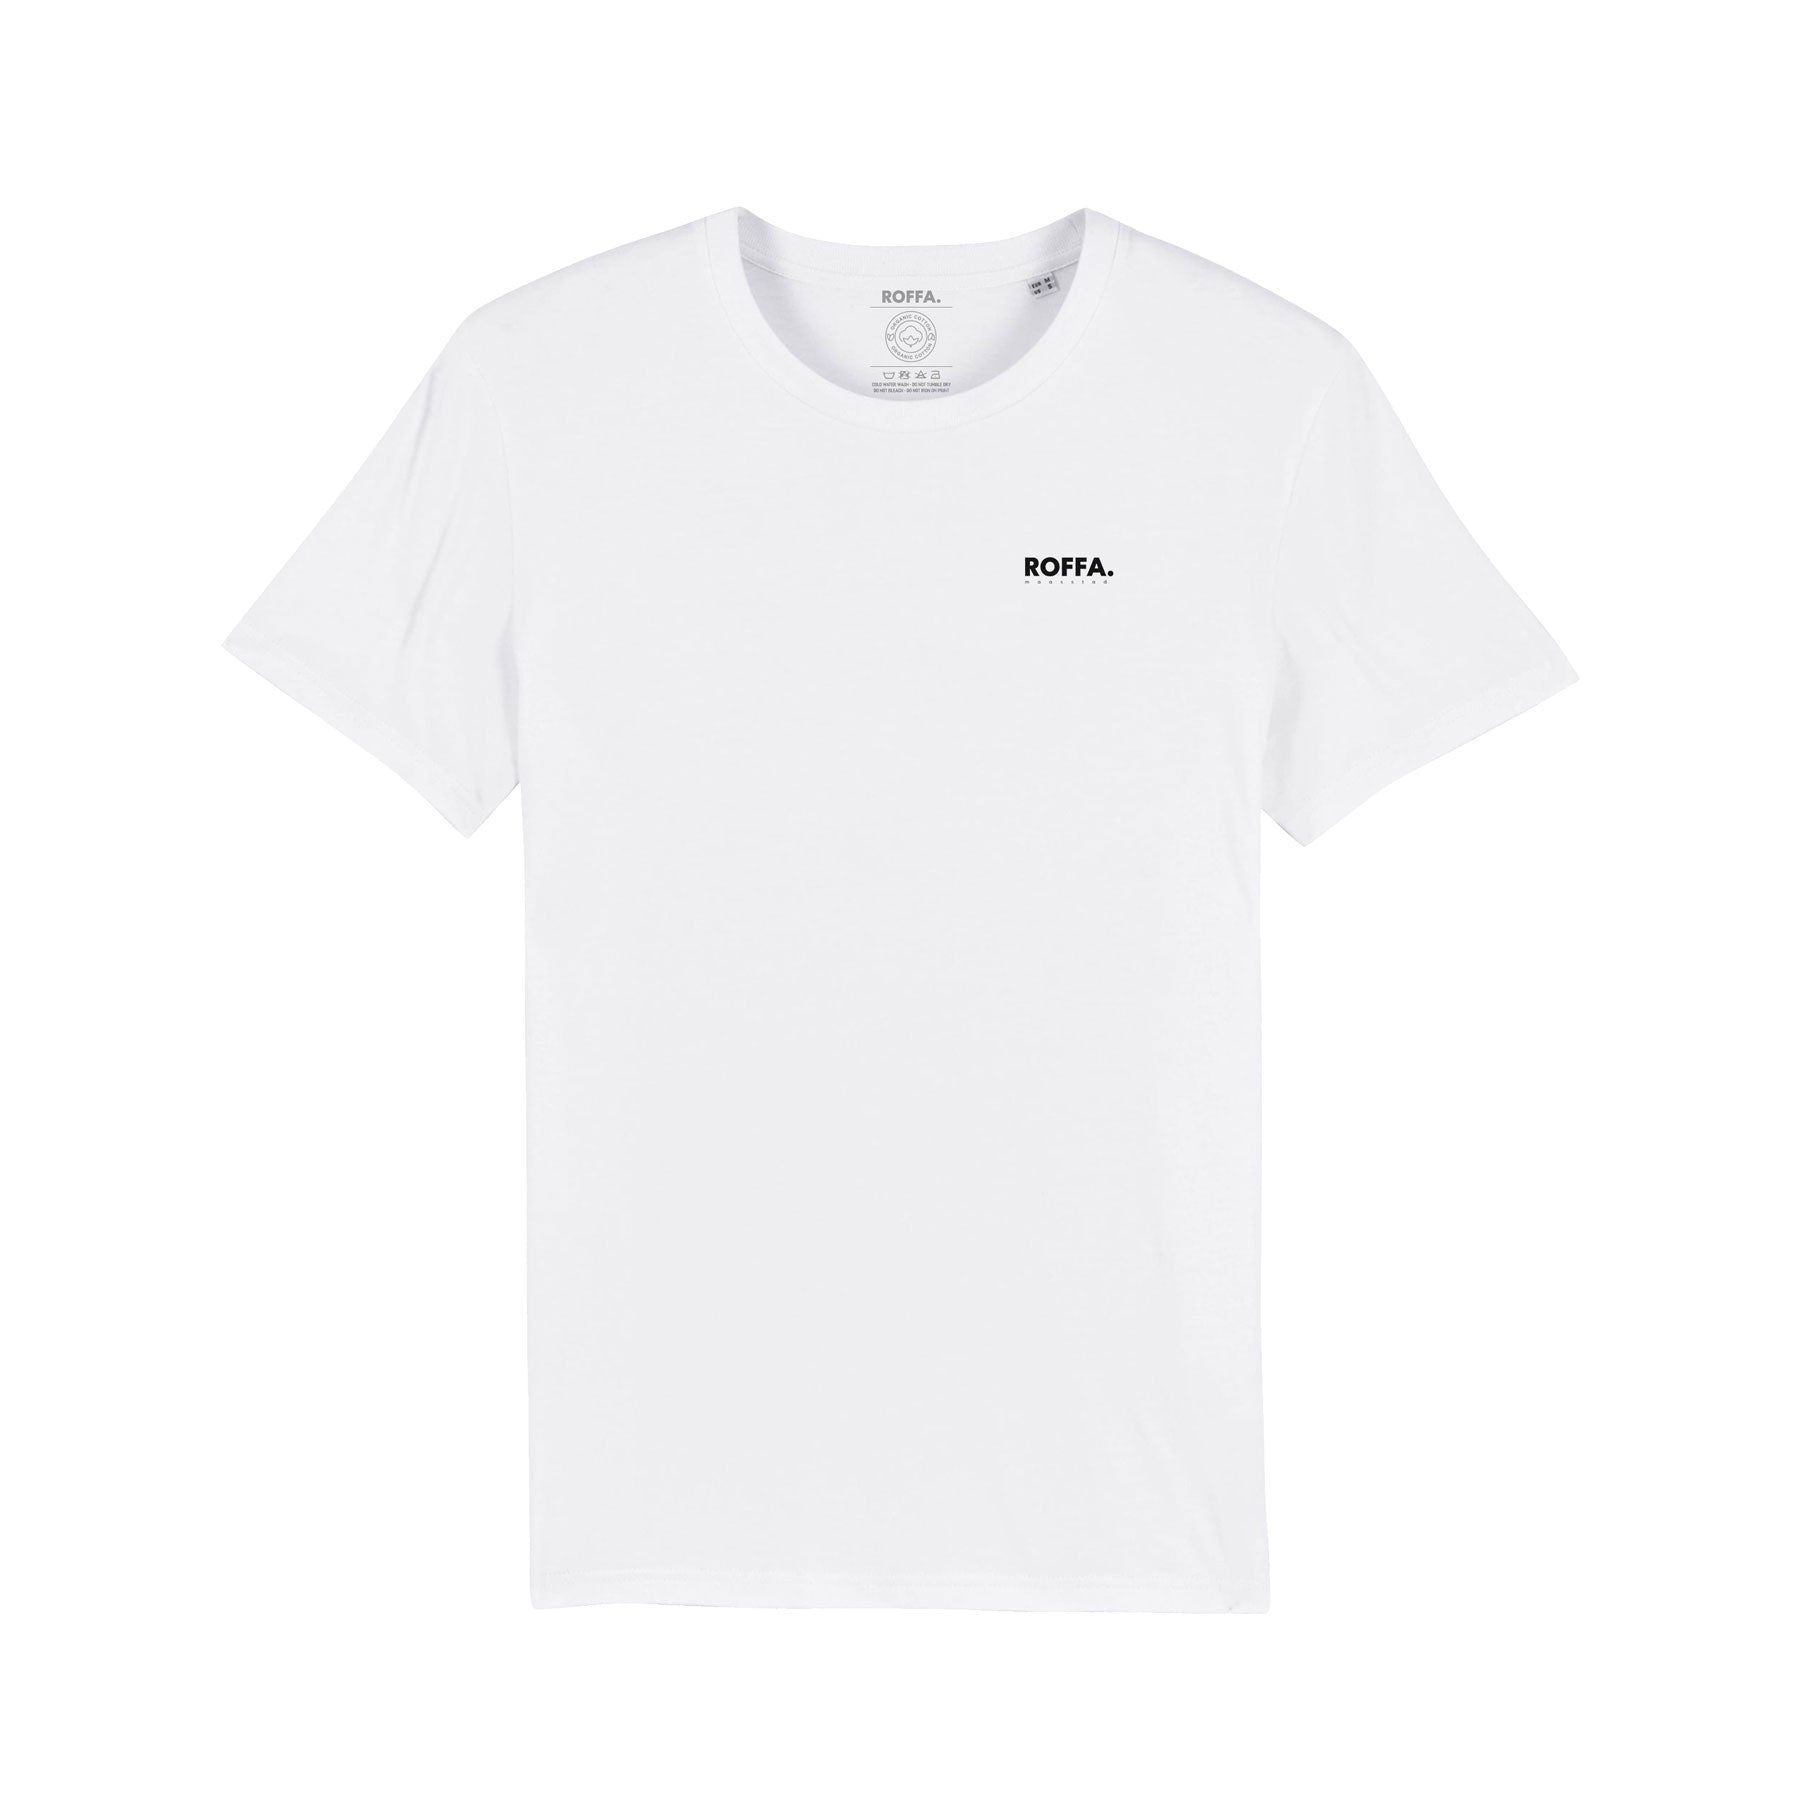 Wit t-shirt met Roffa en rotterdam logo